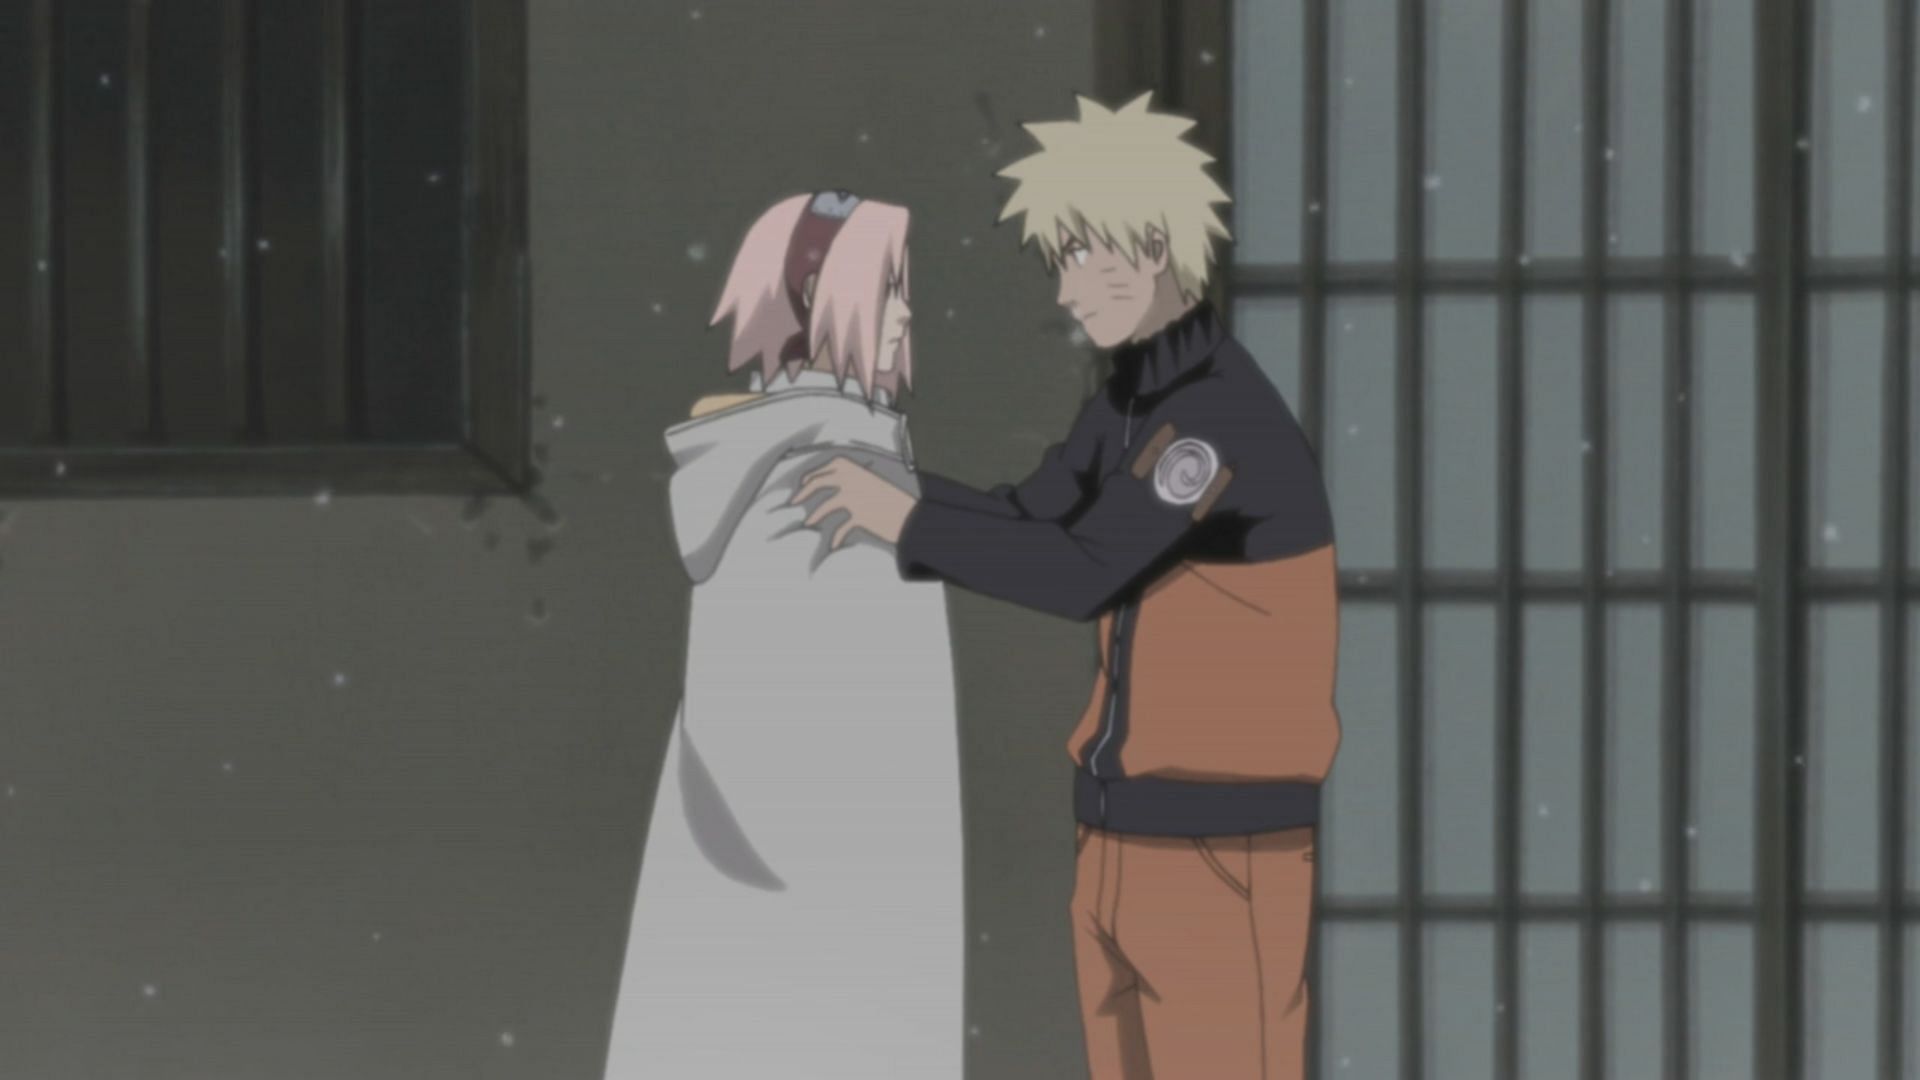 Sakura goes to stop Naruto from going after Sasuke (Image by naruto.fandom.com)